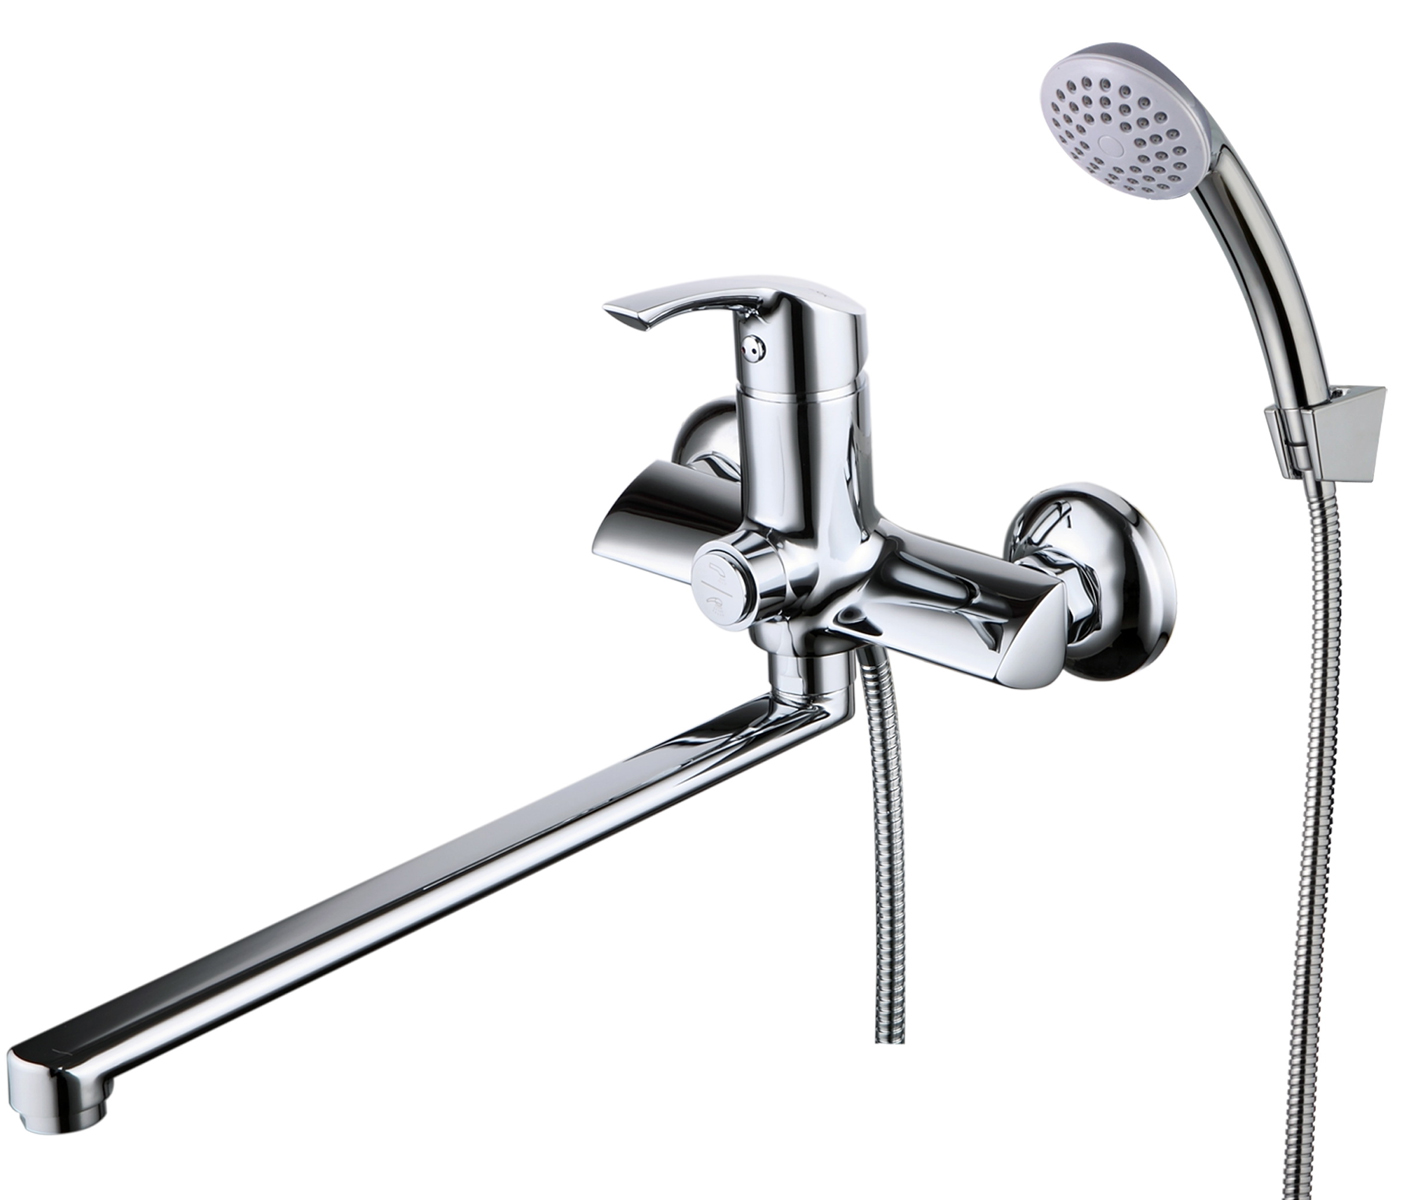 LM1157C Washbasin/bath faucet
with 300 mm flat swivel spout